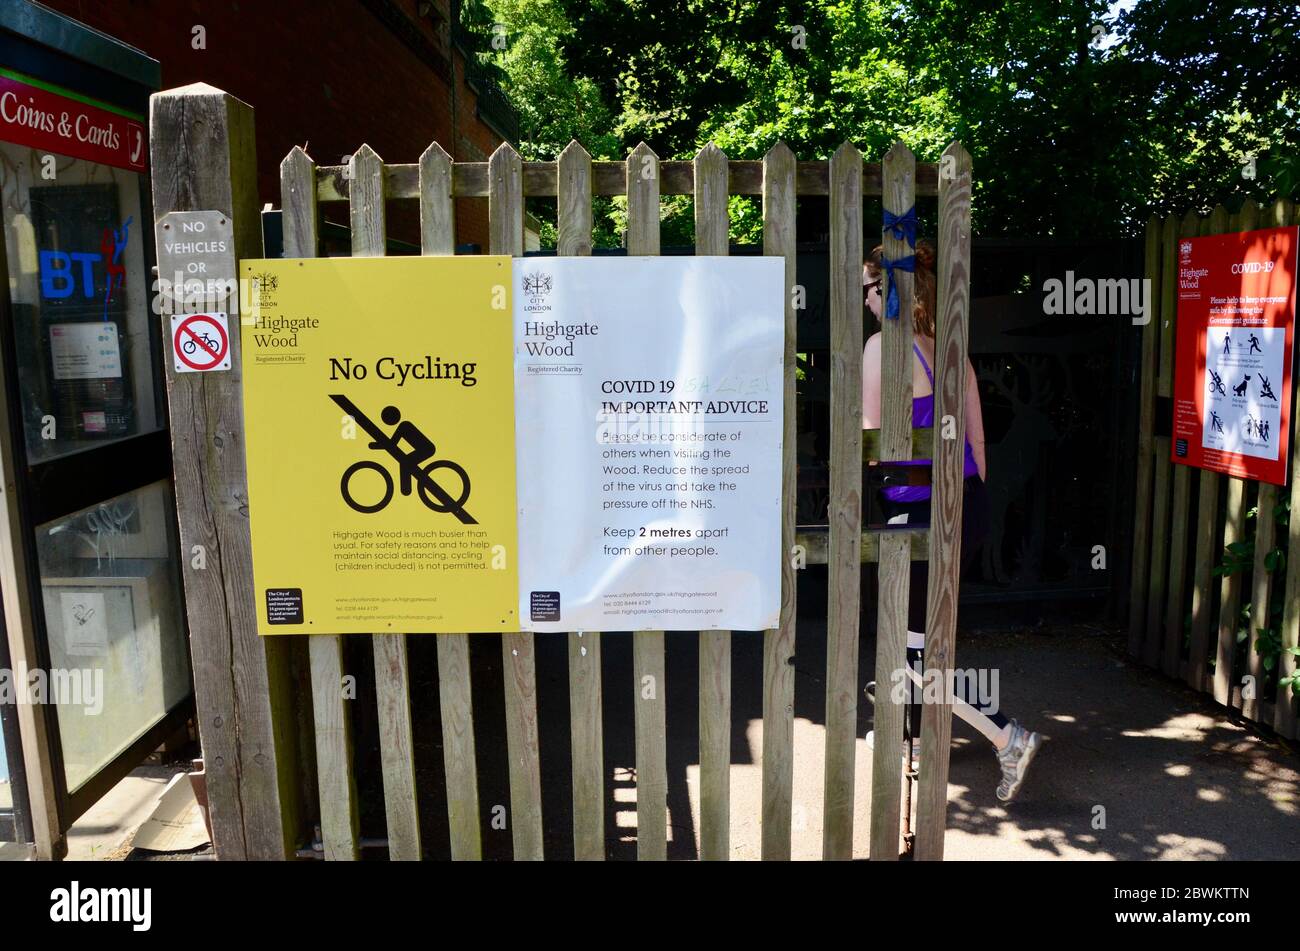 highgate wood london england covid 19 pandemic 2020 senza ciclisti e indicazioni del governo Foto Stock